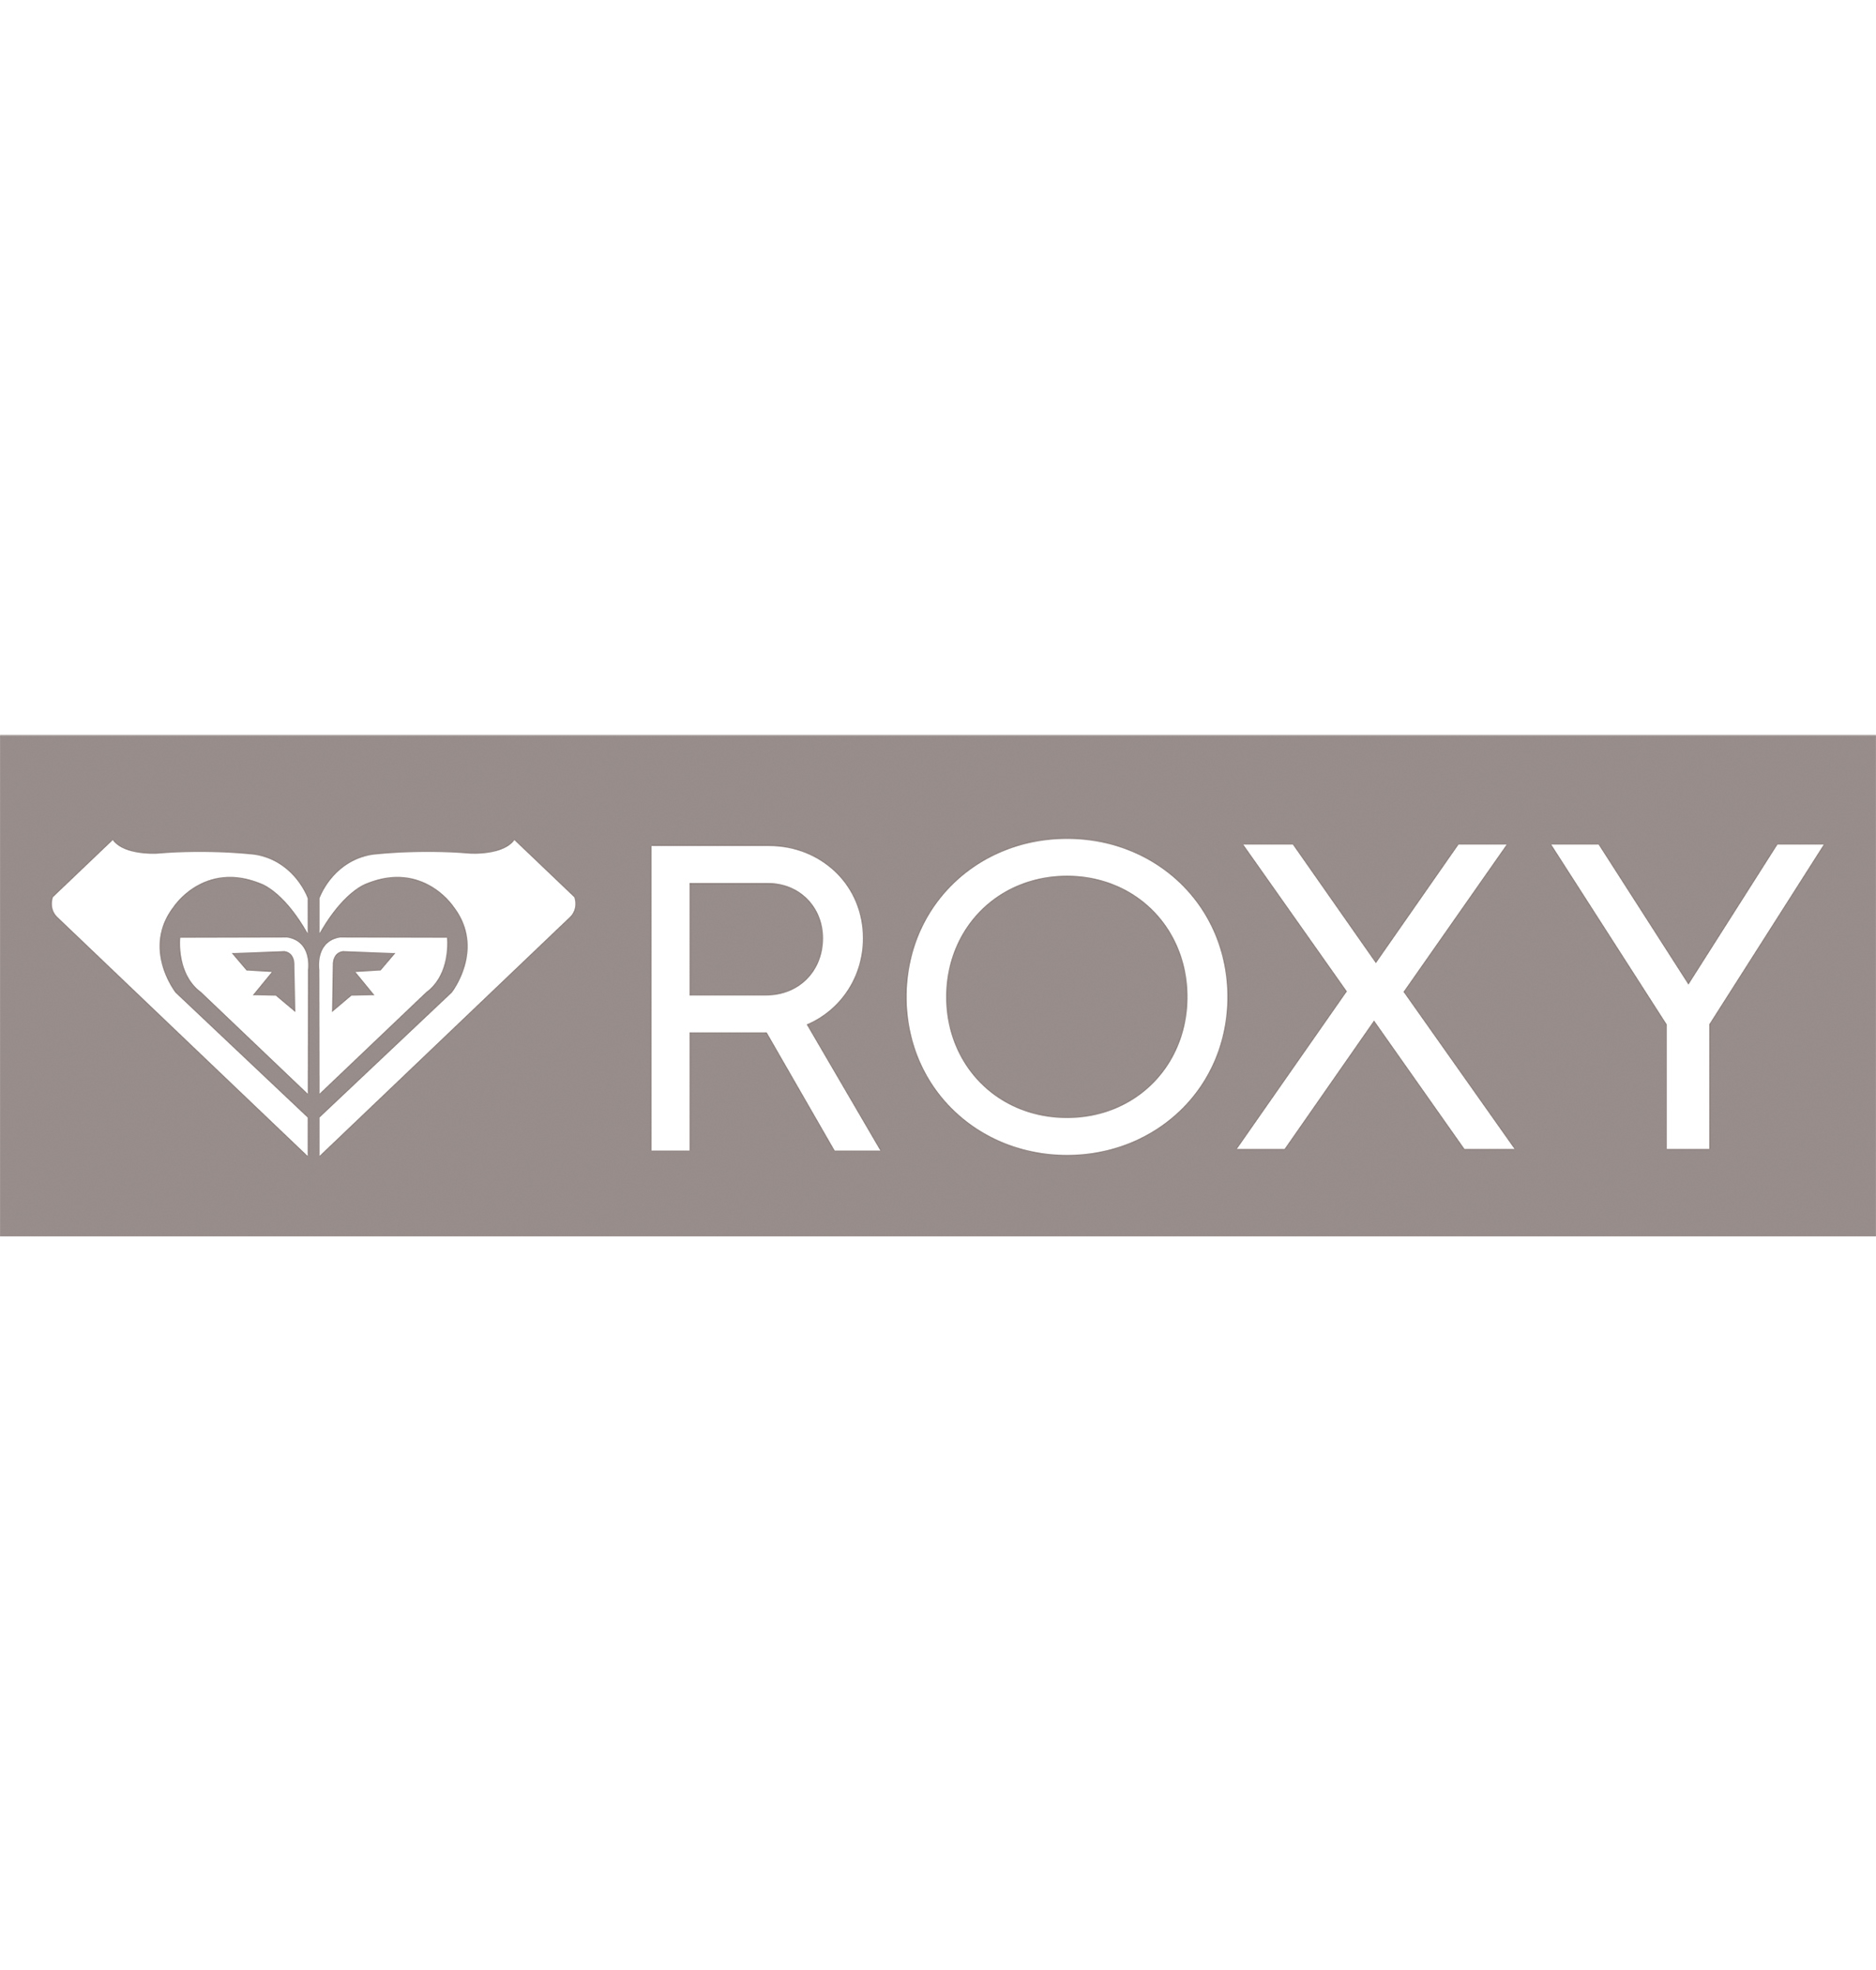 ＜Roxy＞ROXY-B アクティブなROXYファンの目印になるブランドロゴステッカー画像